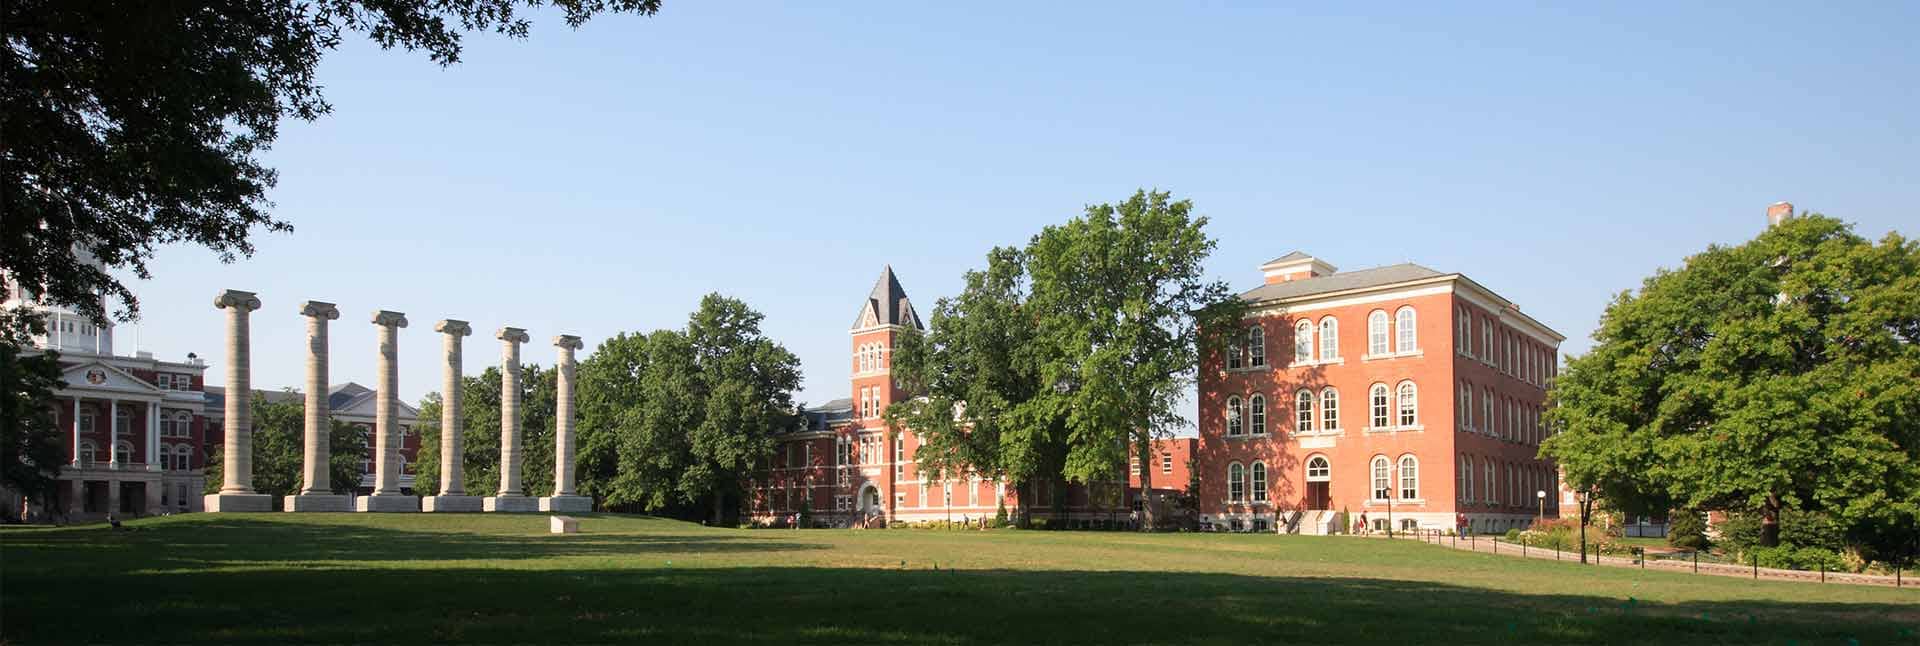 Switzler Hall, University of Missouri